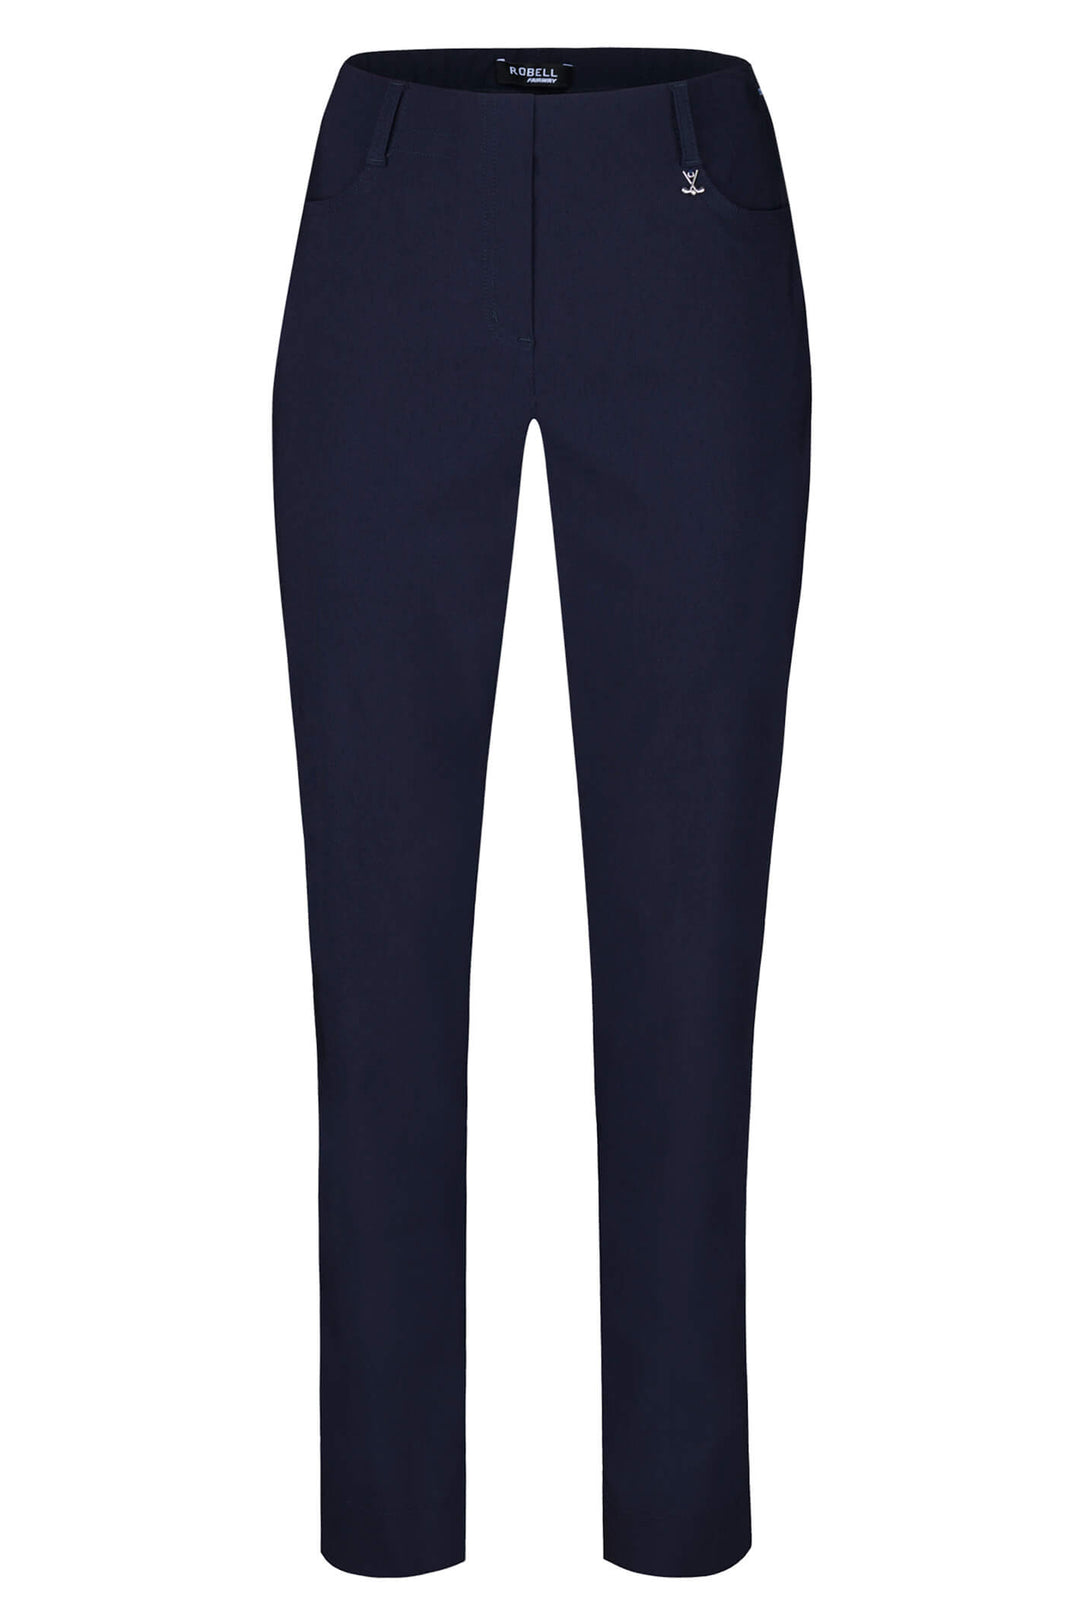 Robell Lexi Navy Golf Trousers 78cm 52668 5499 - Olivia Grace Fashion